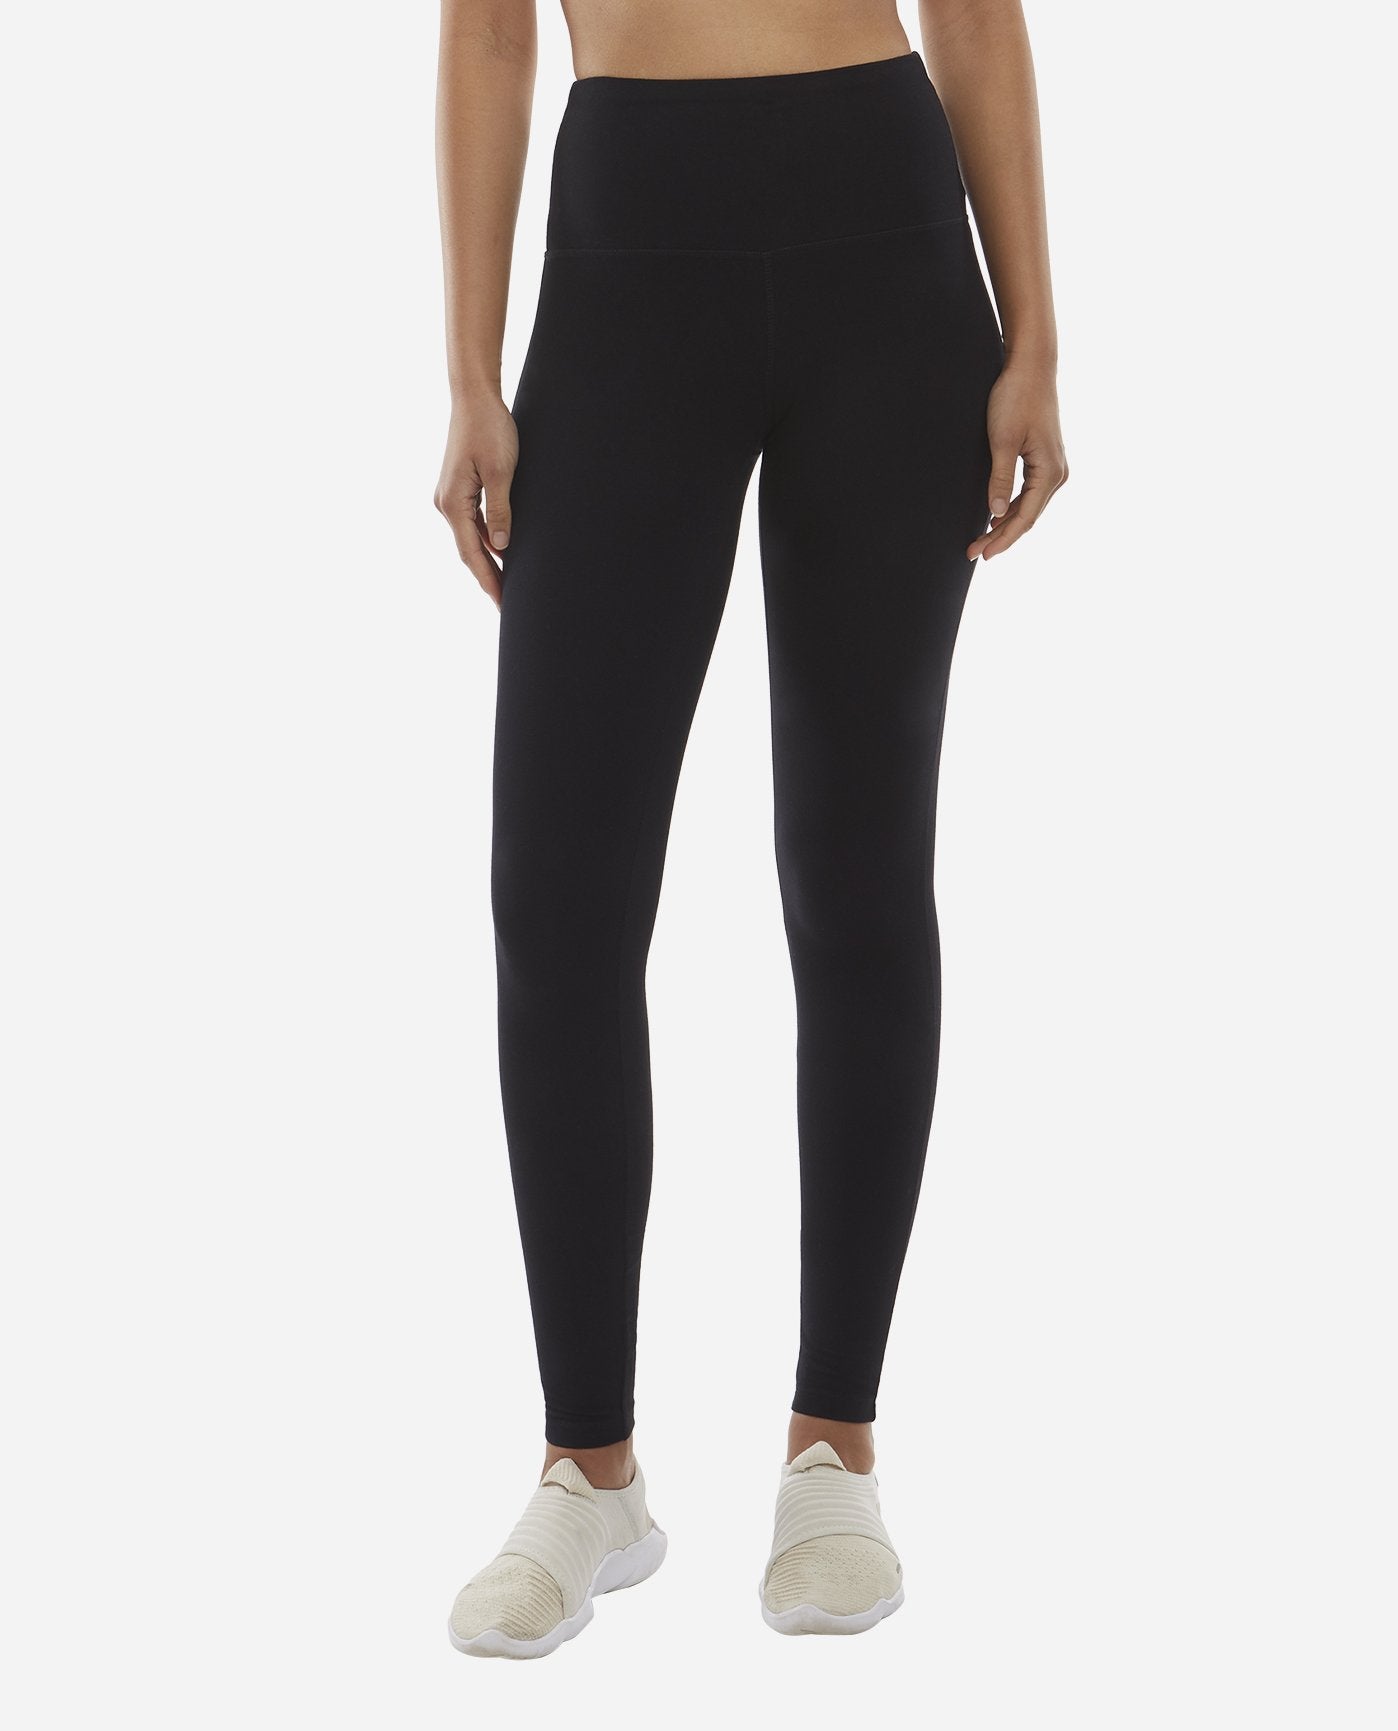 Danskin Women's Plus Size Essential Yoga Pant Medium Black